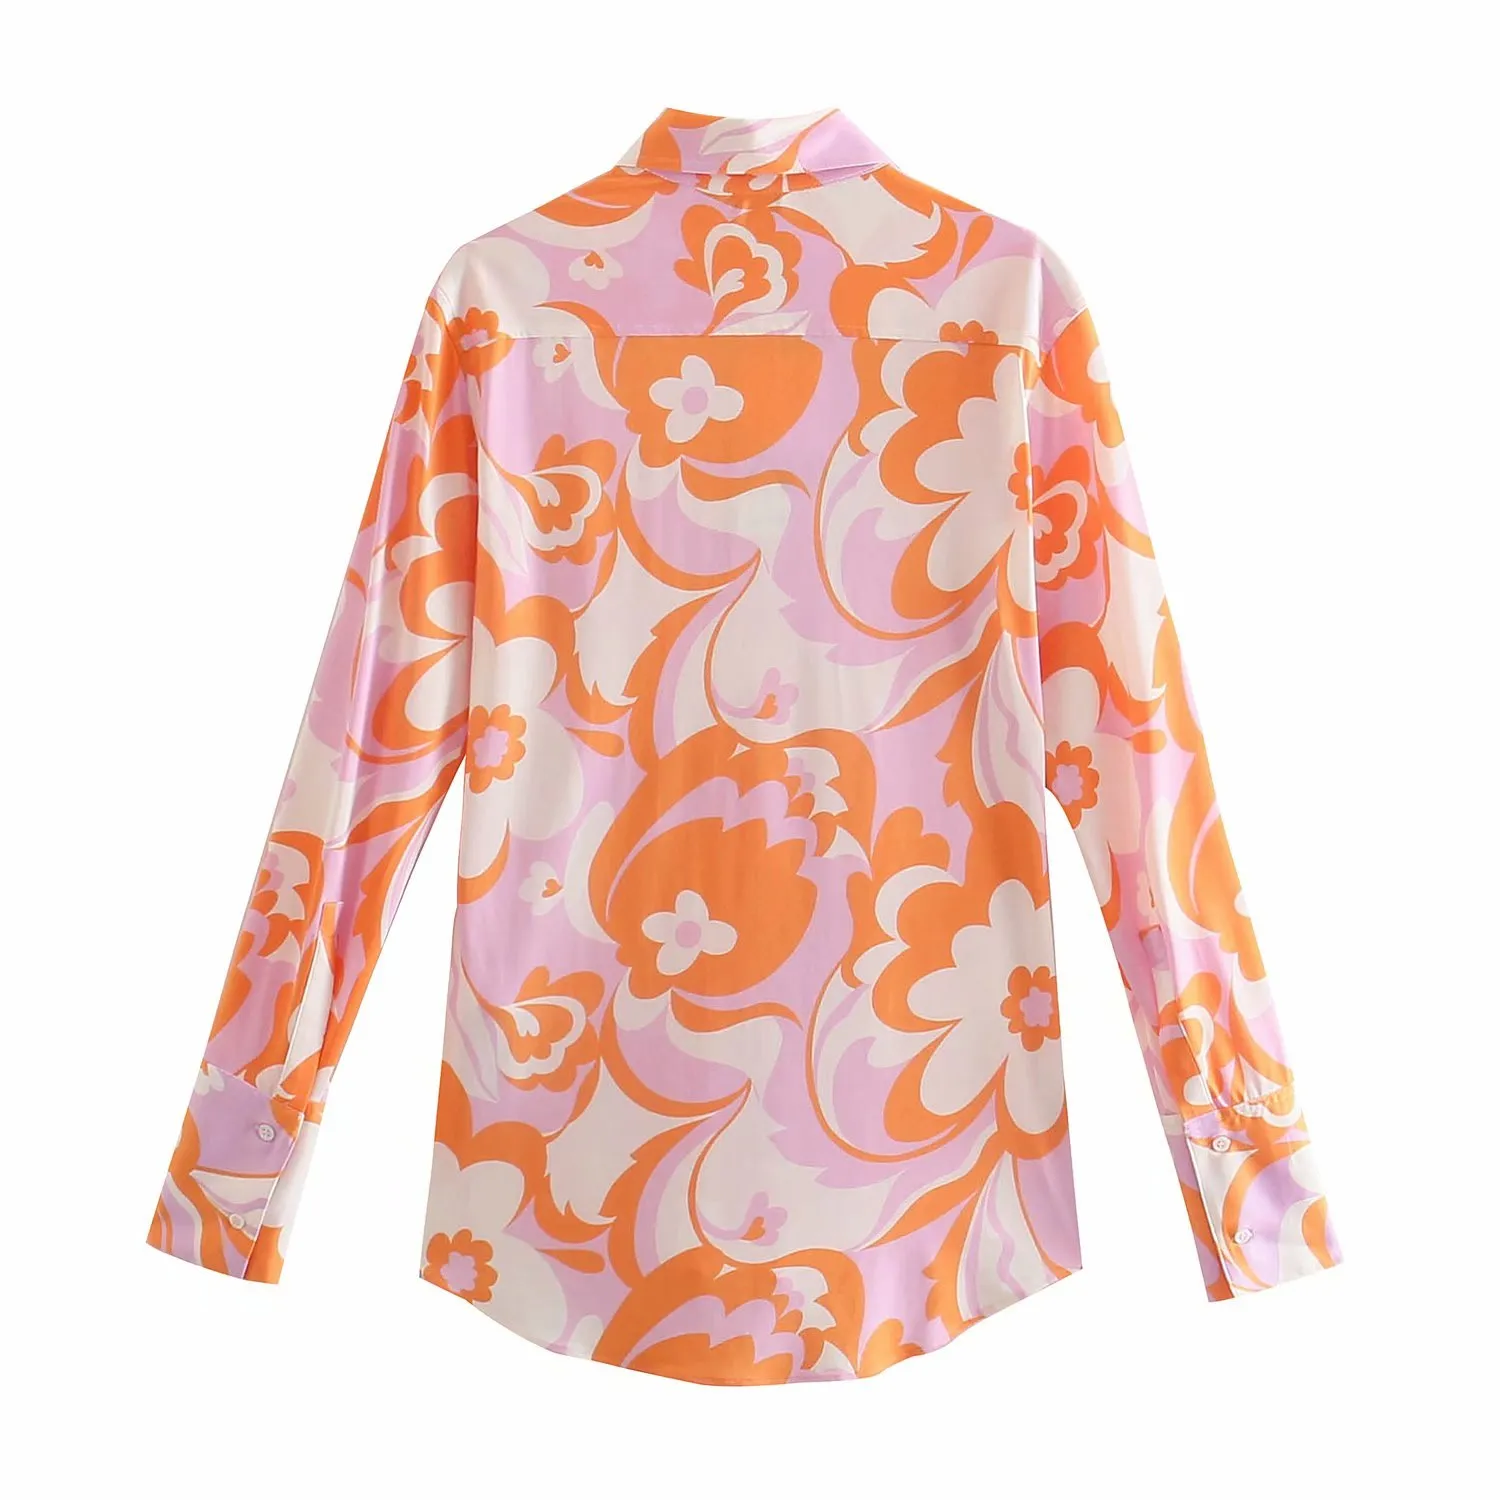 VUWWYV Women Shirts Orange Print Button Up Woman Long Sleeve Collared Shirt Fashion Streetwear Ladies Tops Blouse 210430